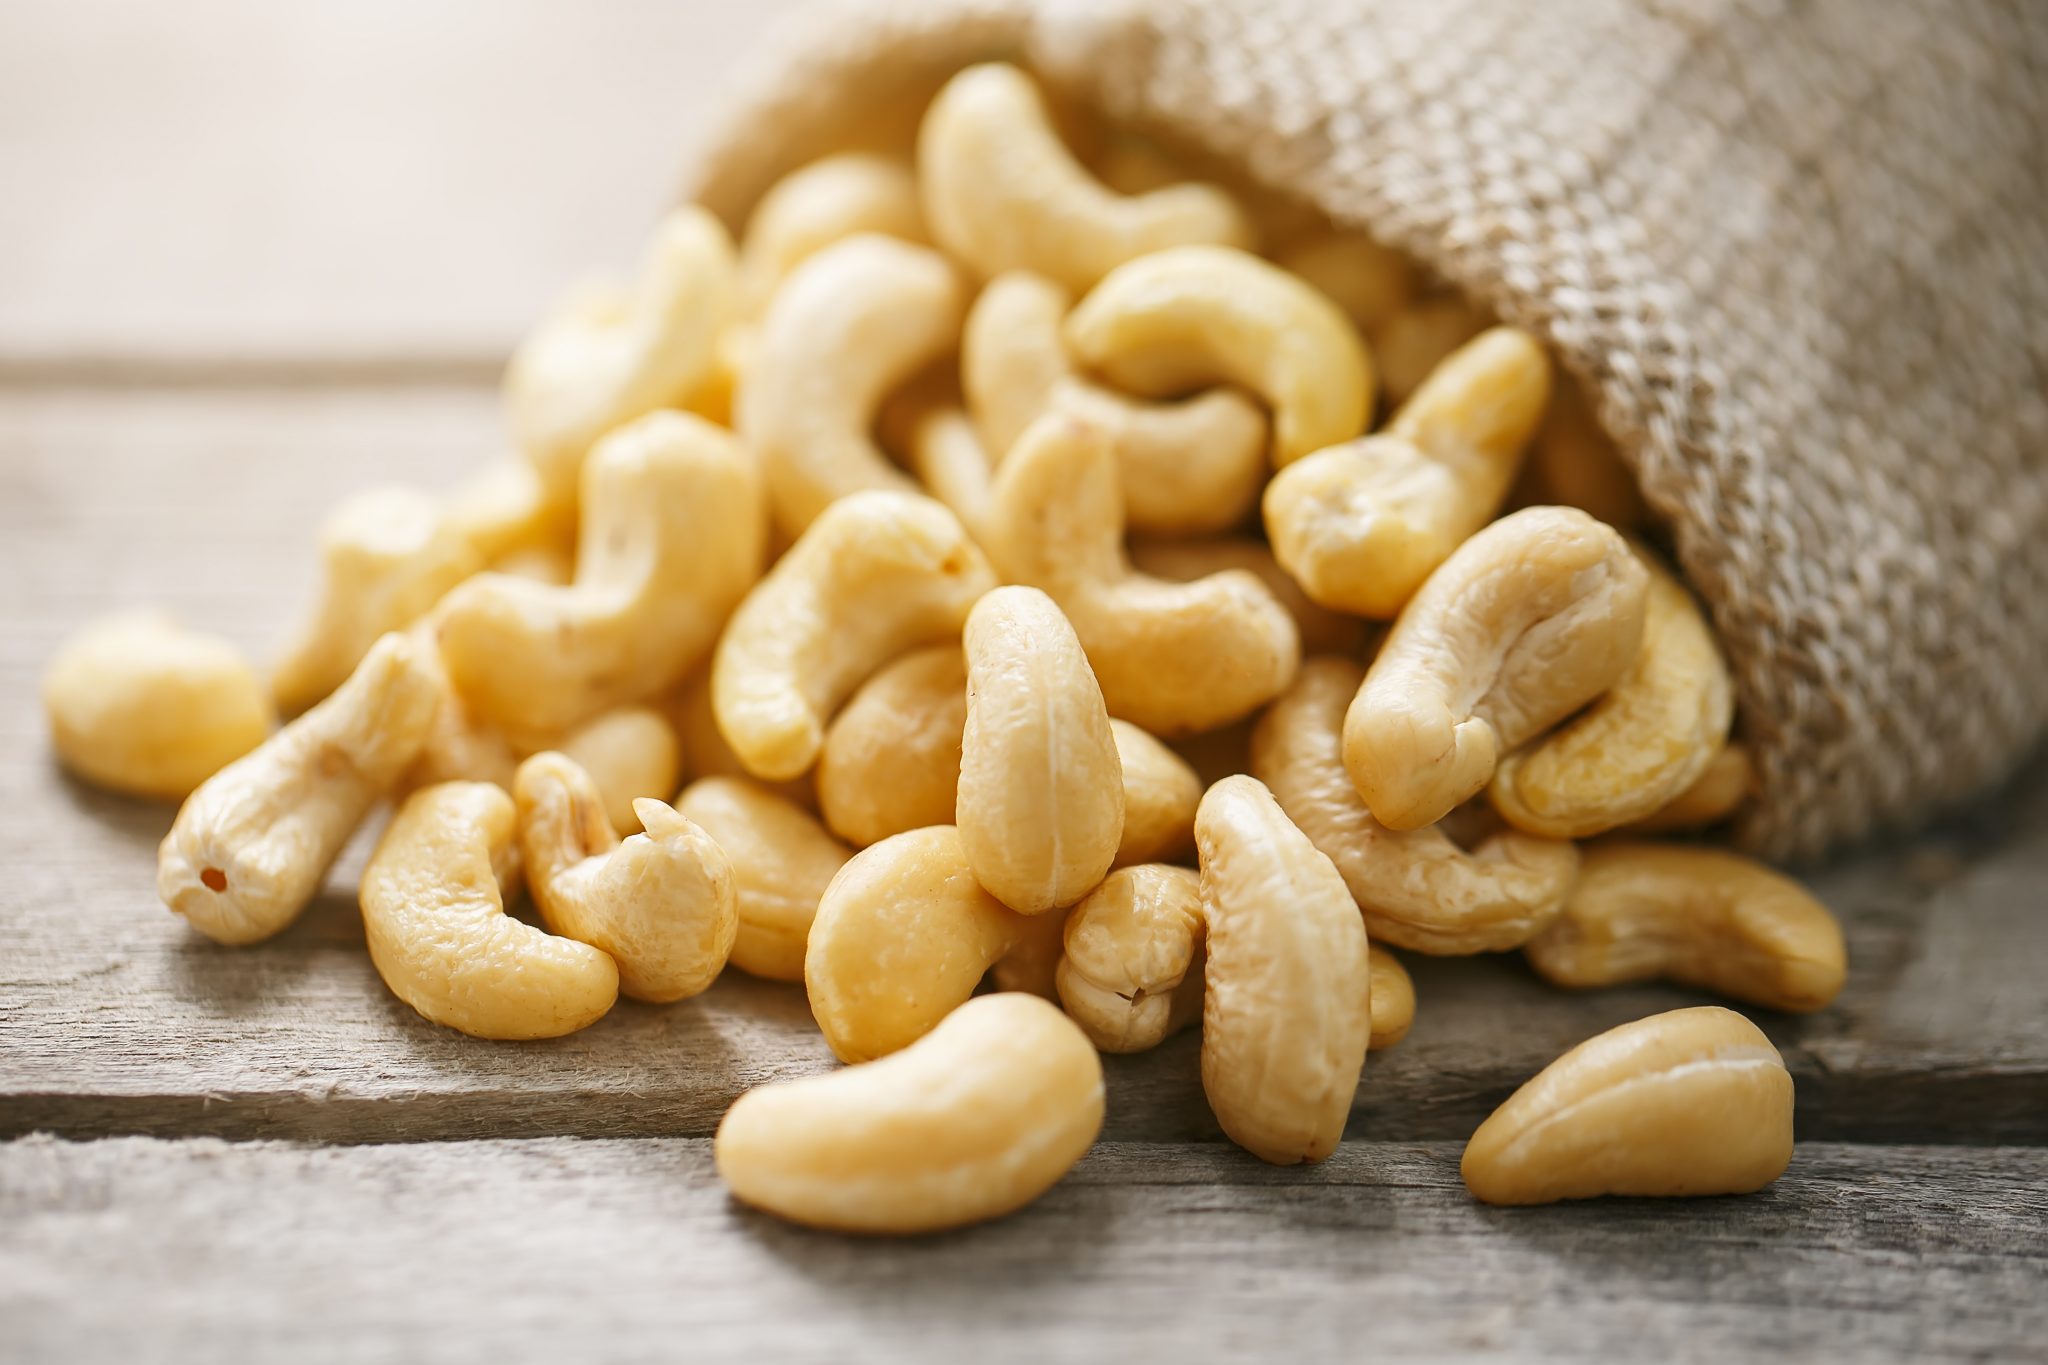 Nutritional benefits of cashews - Dr. Pingel